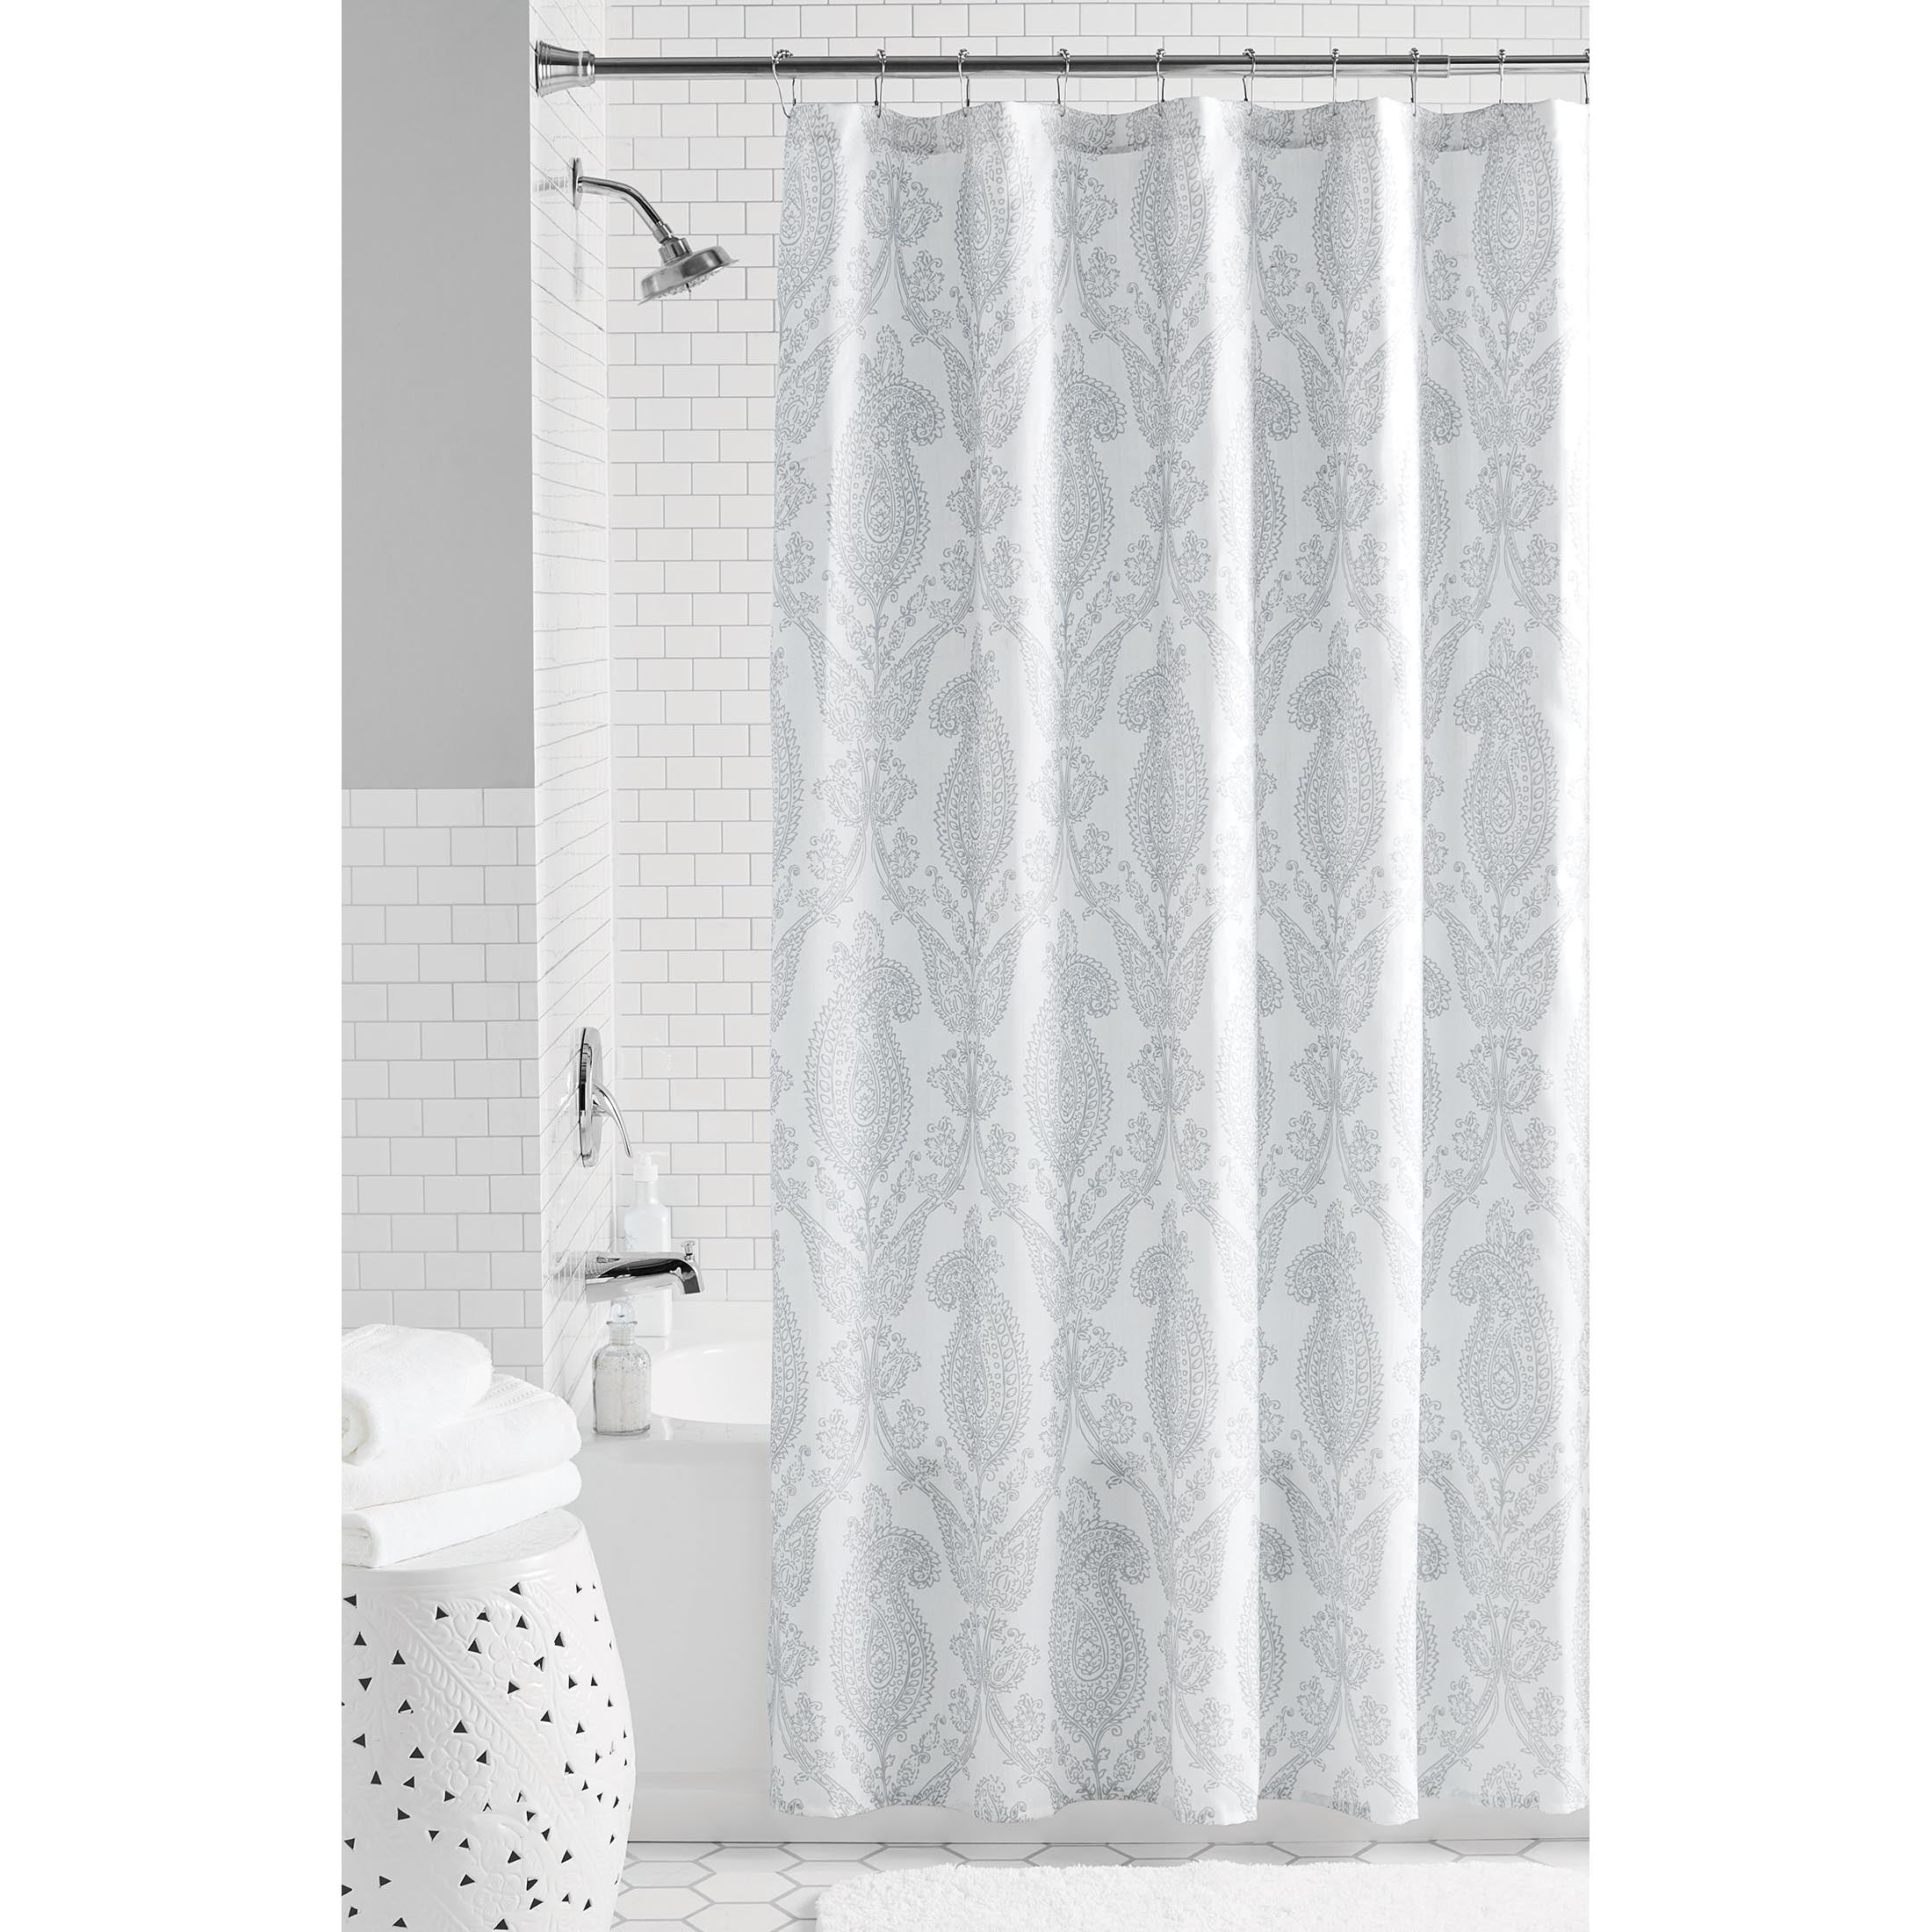 Pink/White PEVA Shower Curtain, 70